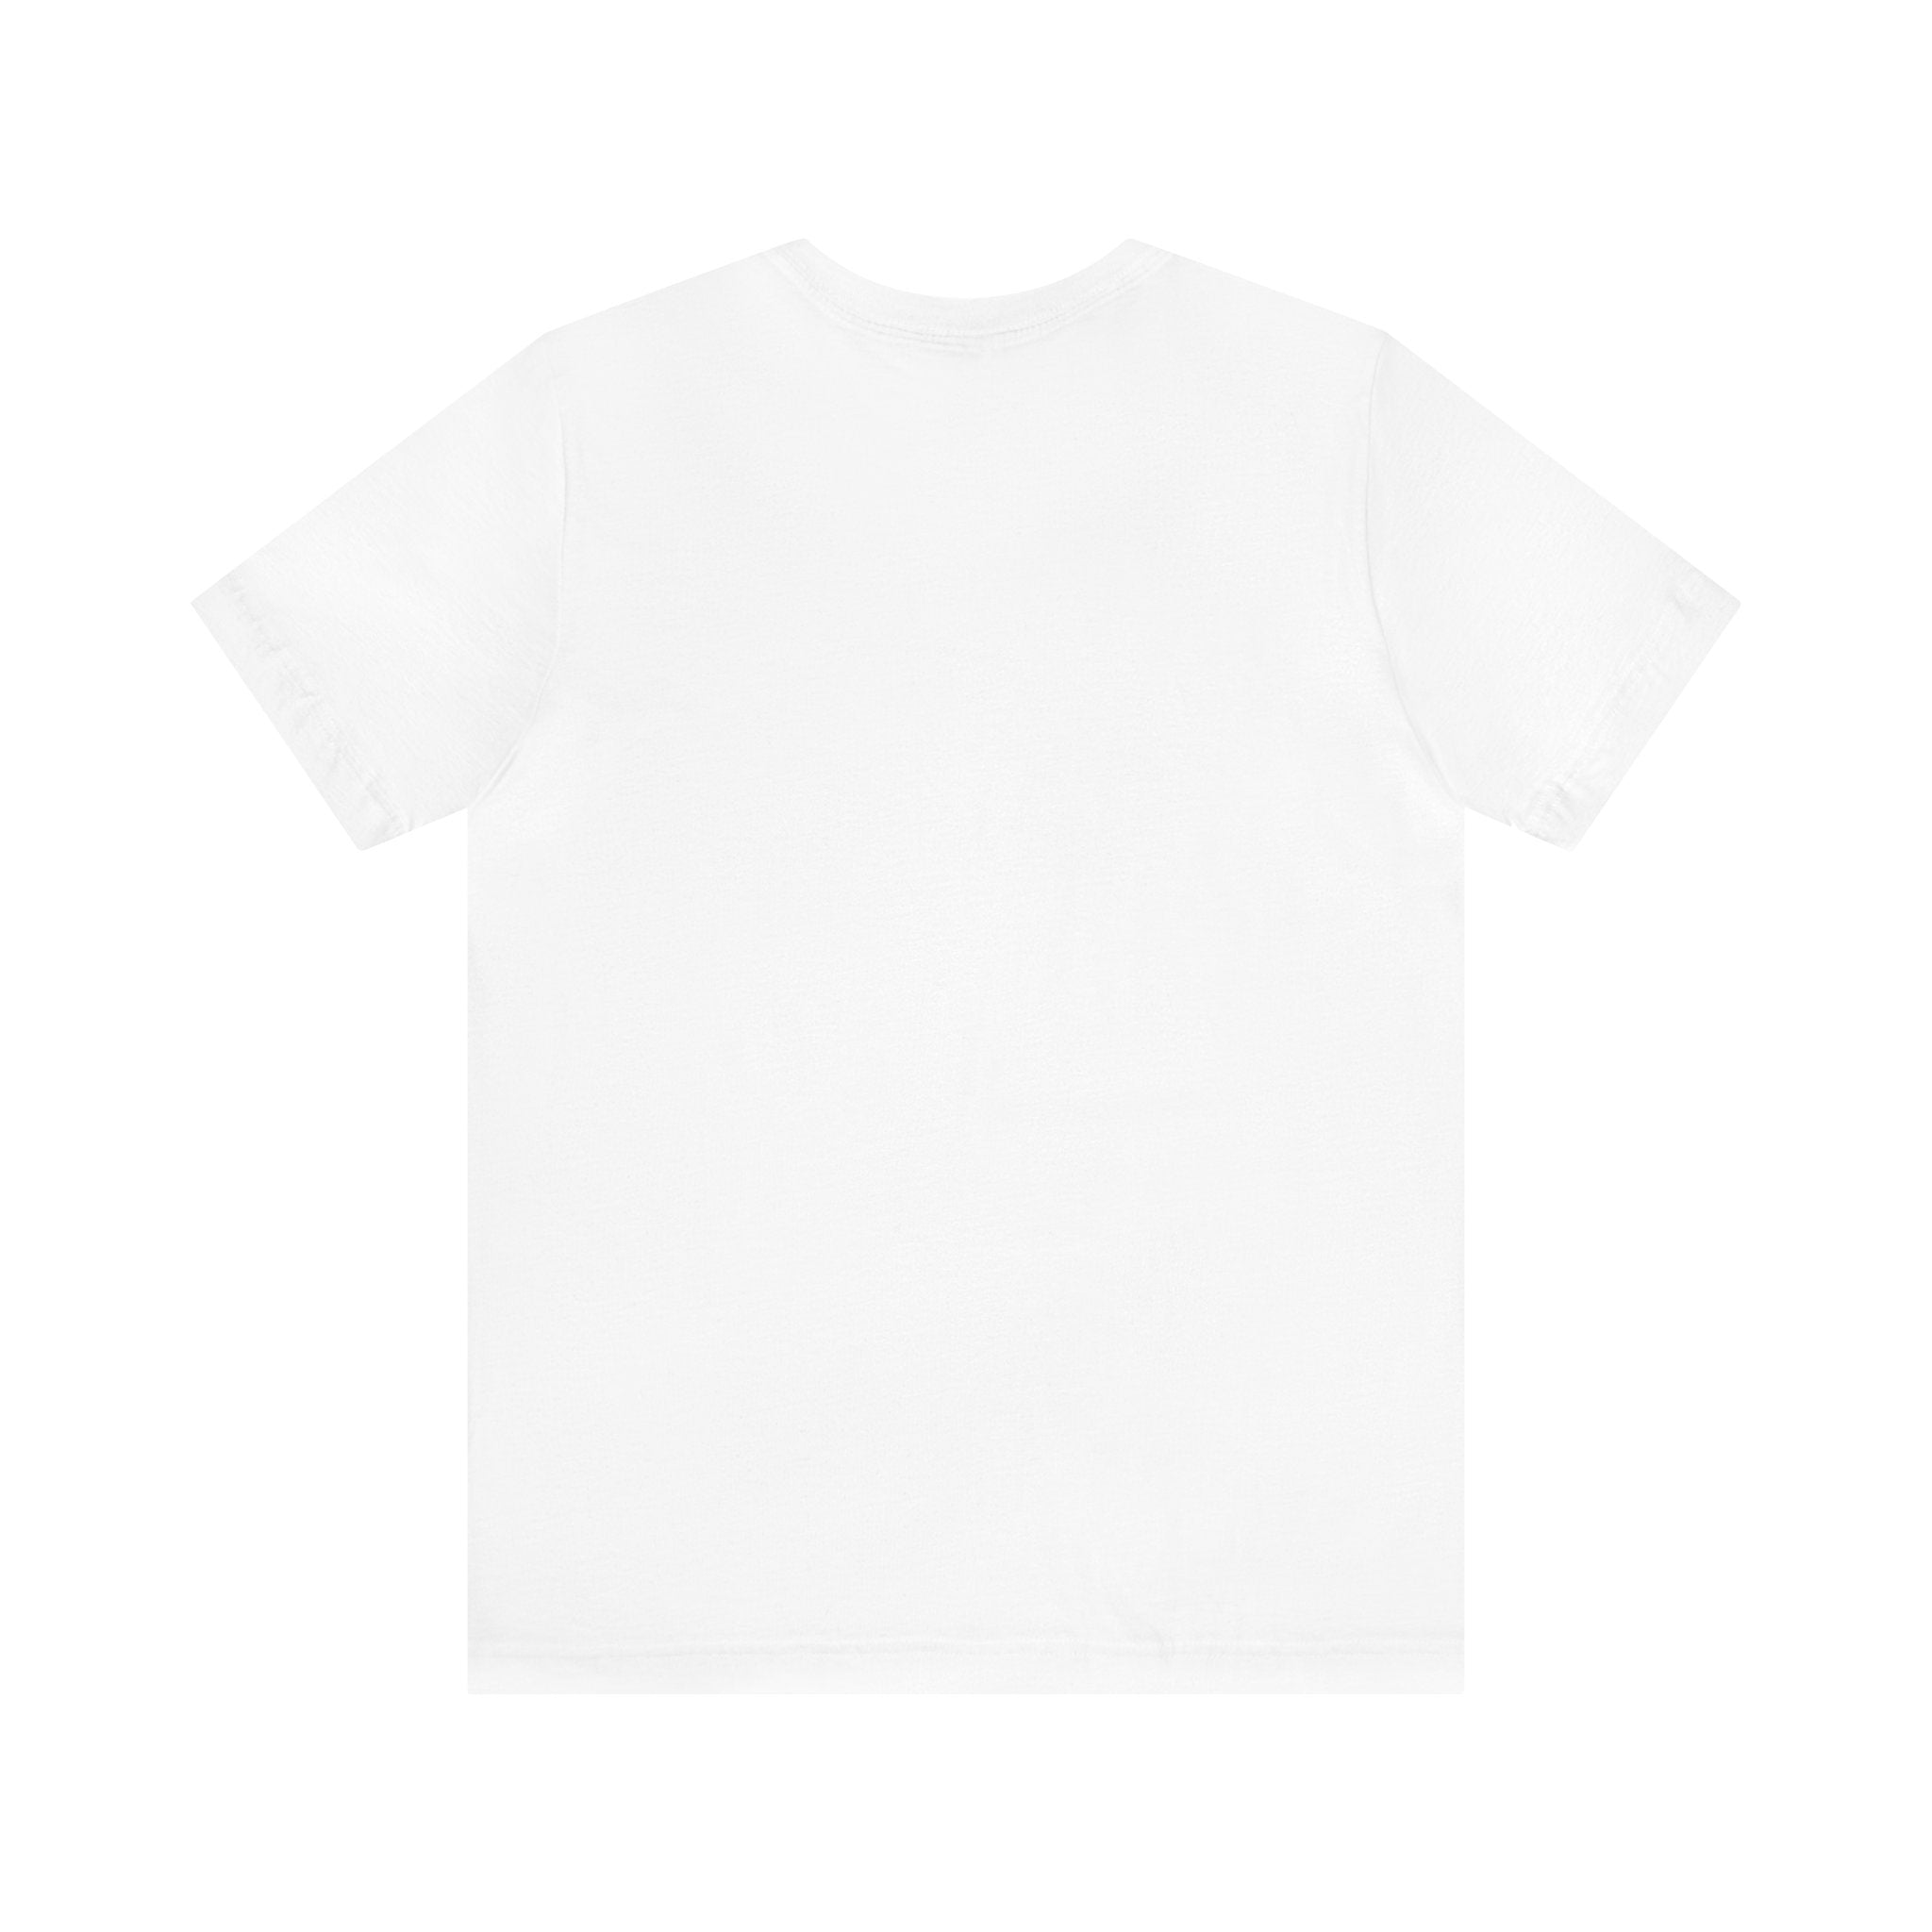 Cat Lovers T-Shirt Short Sleeve Tee for Wife Birthday For Girlfriend Cute TShirt For Gift Funny T-Shirt for Gift Kitten T Shirt